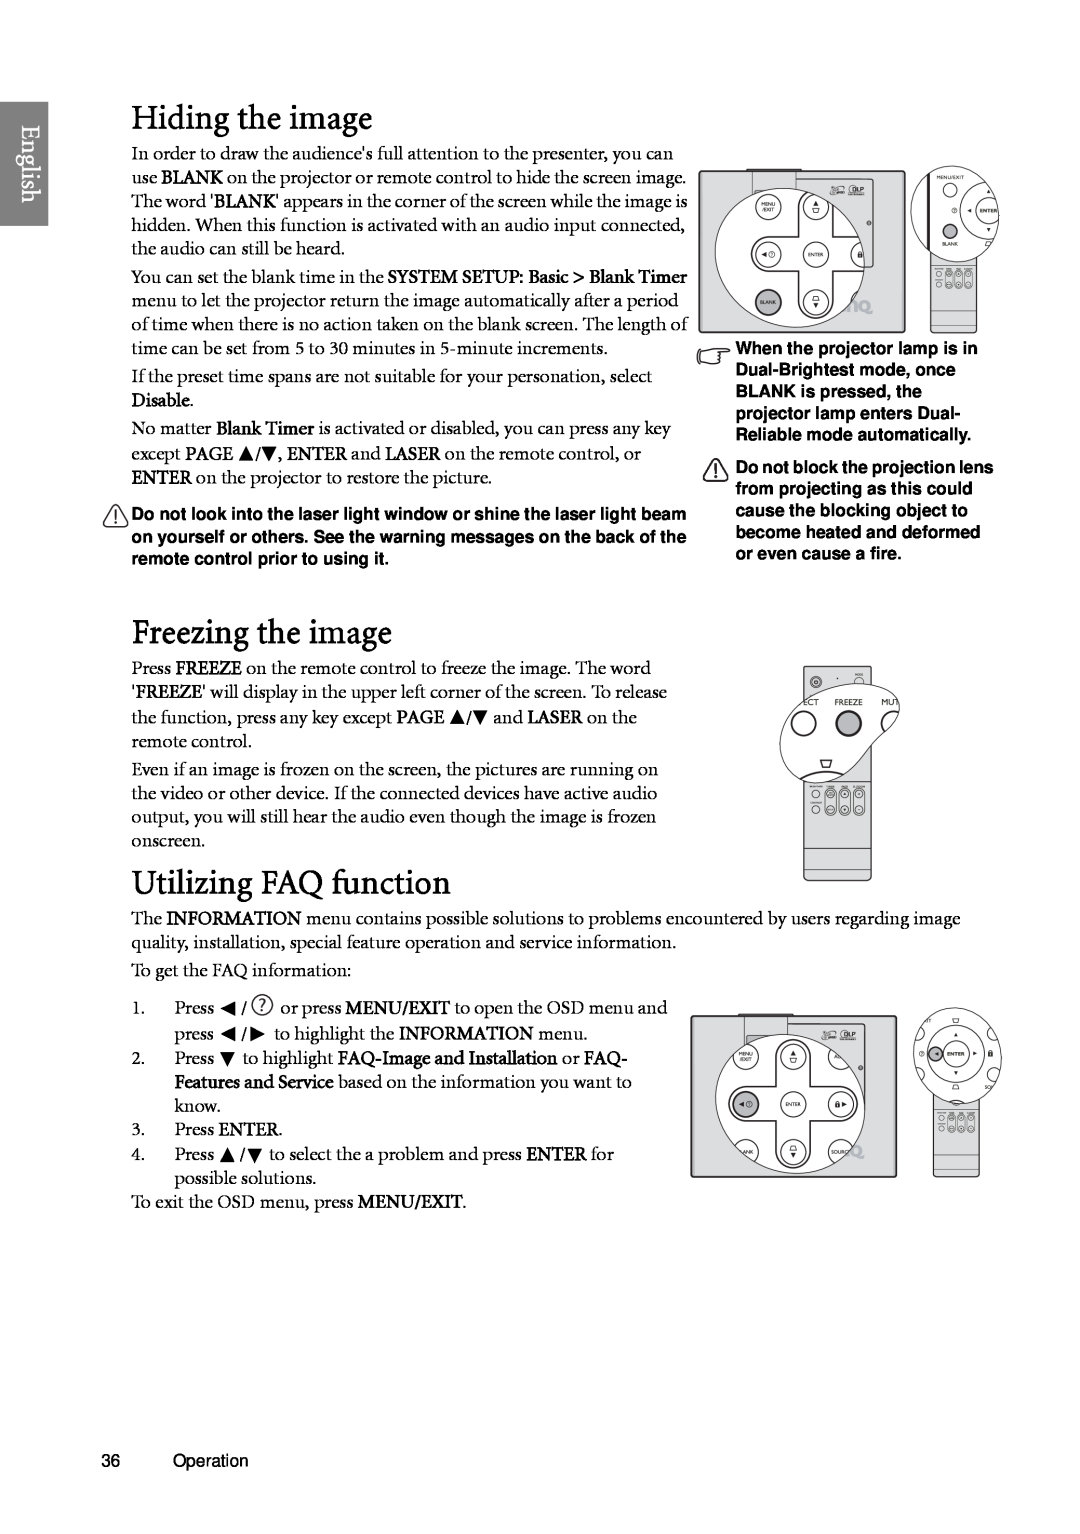 BenQ SP920 user manual Hiding the image, Freezing the image, Utilizing FAQ function, English 